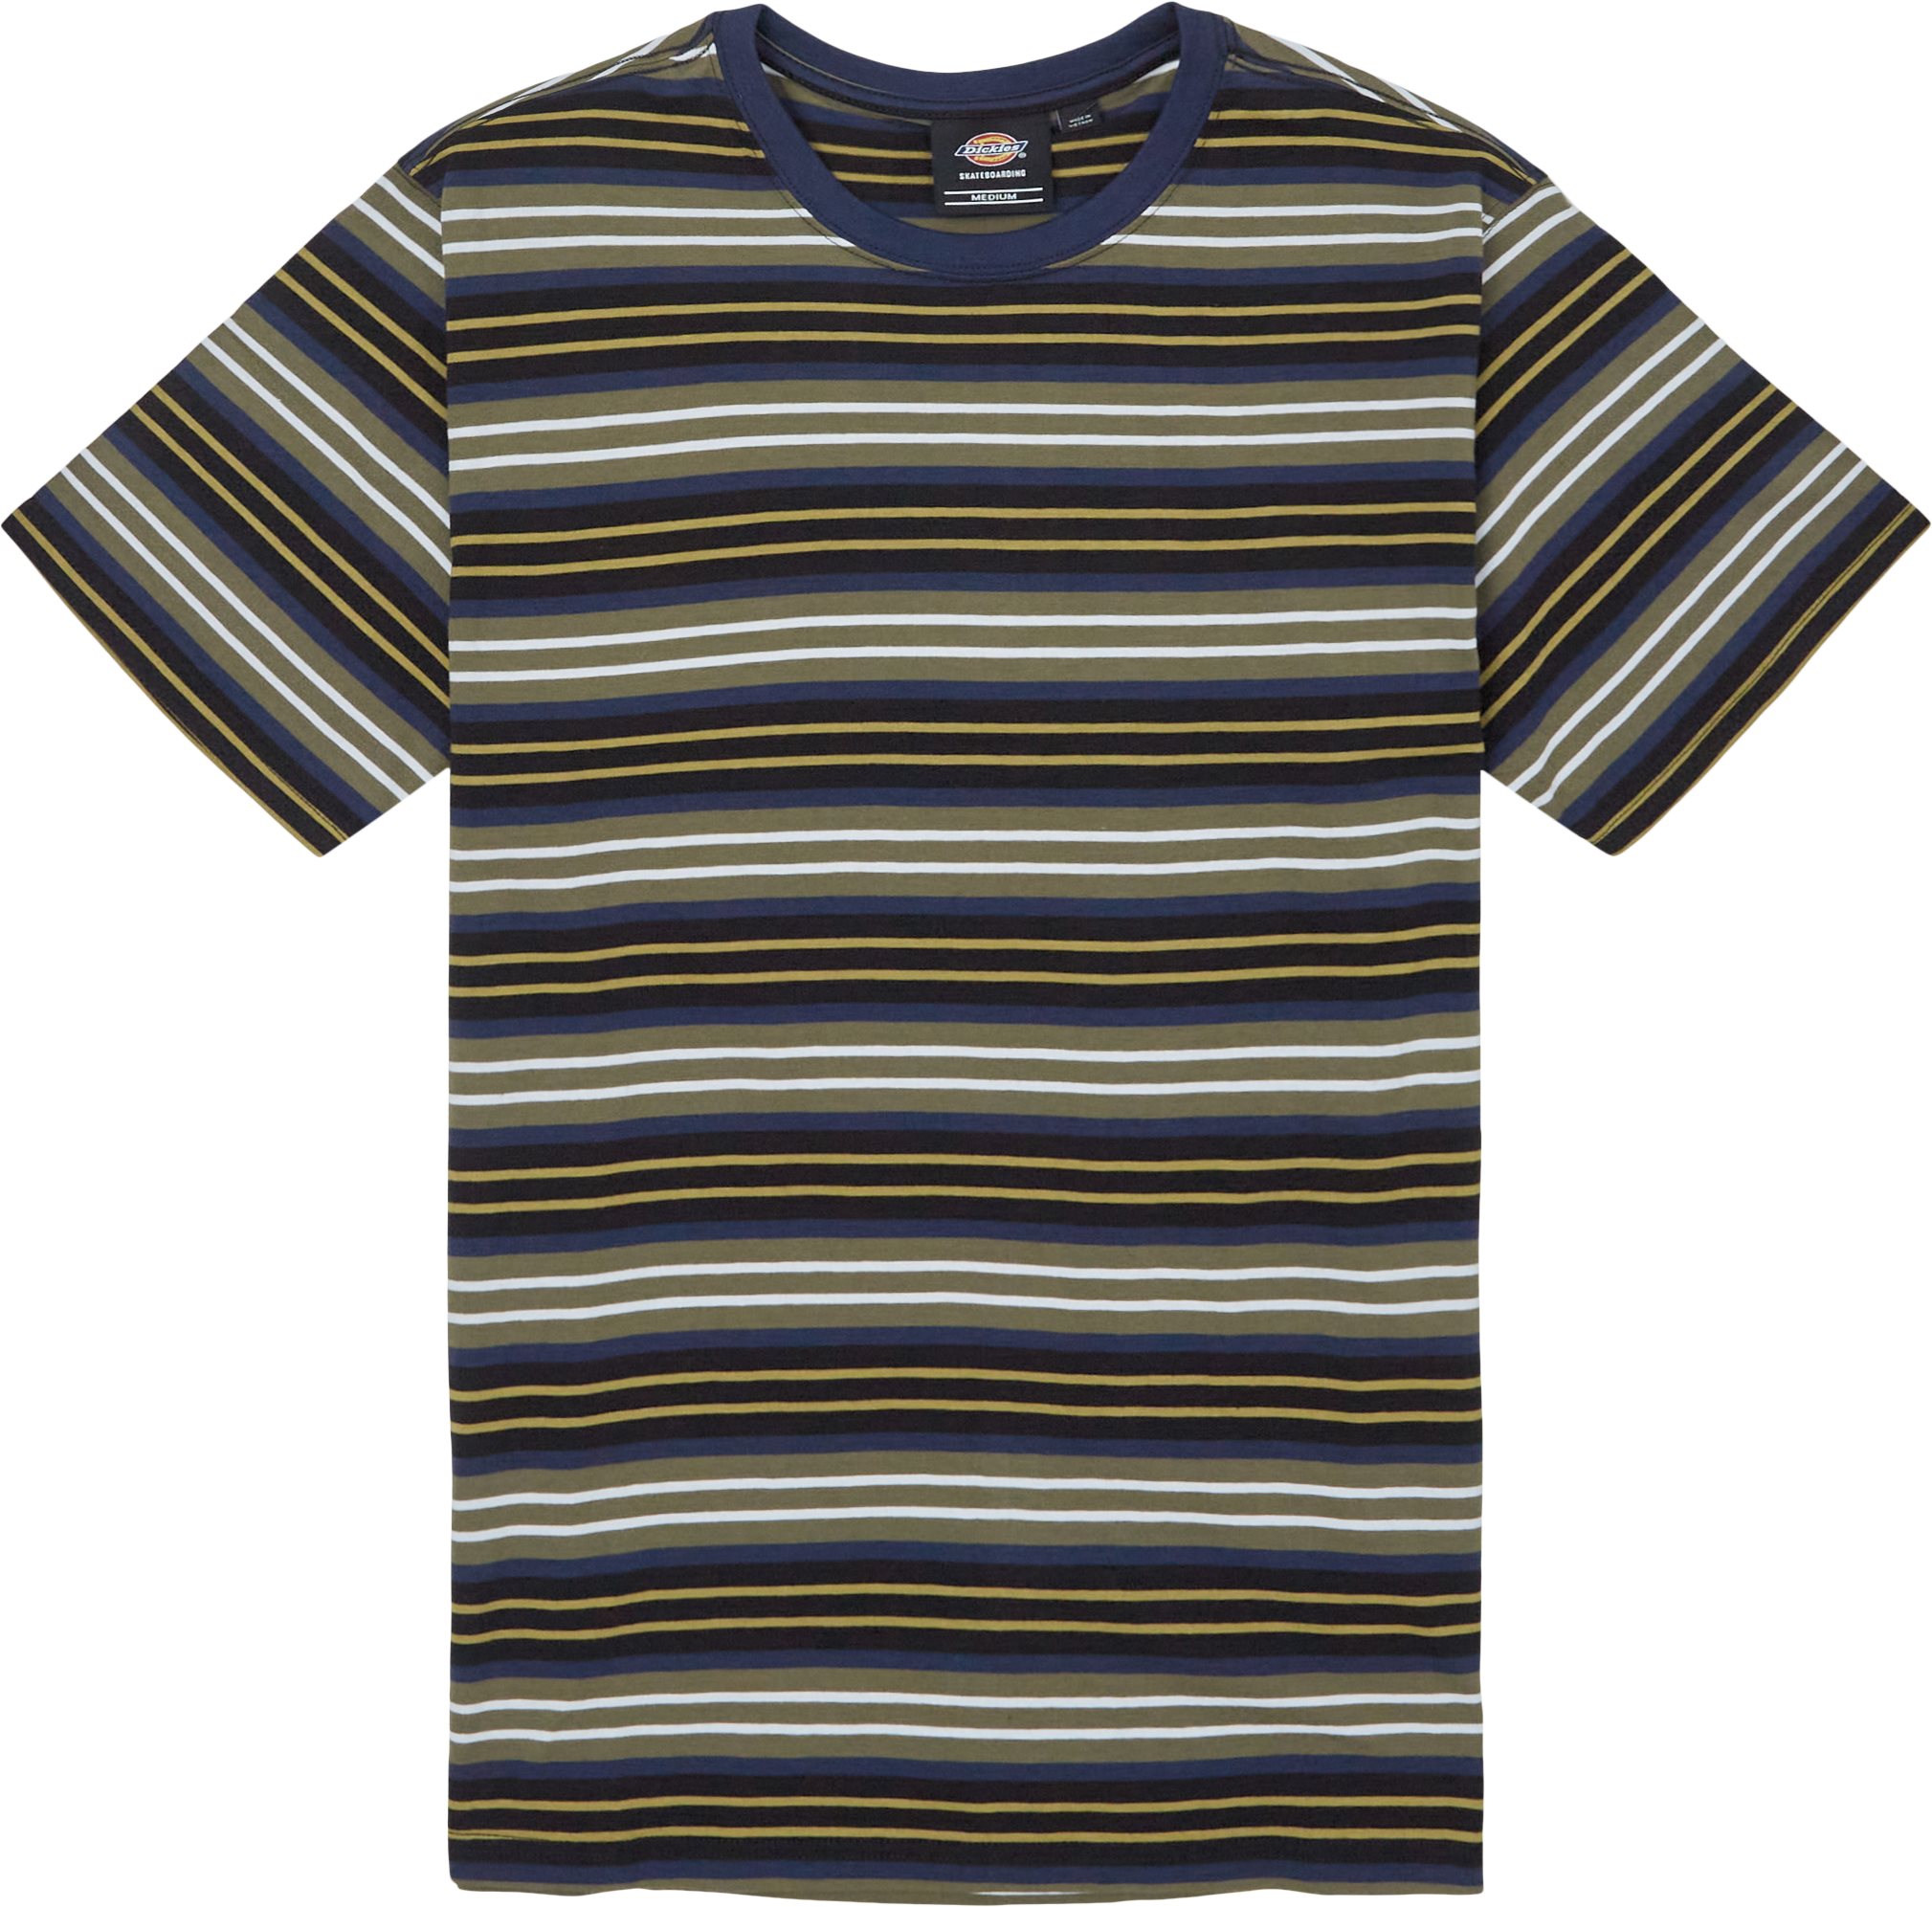 Bothell Stripe Tee - T-shirts - Regular fit - Black